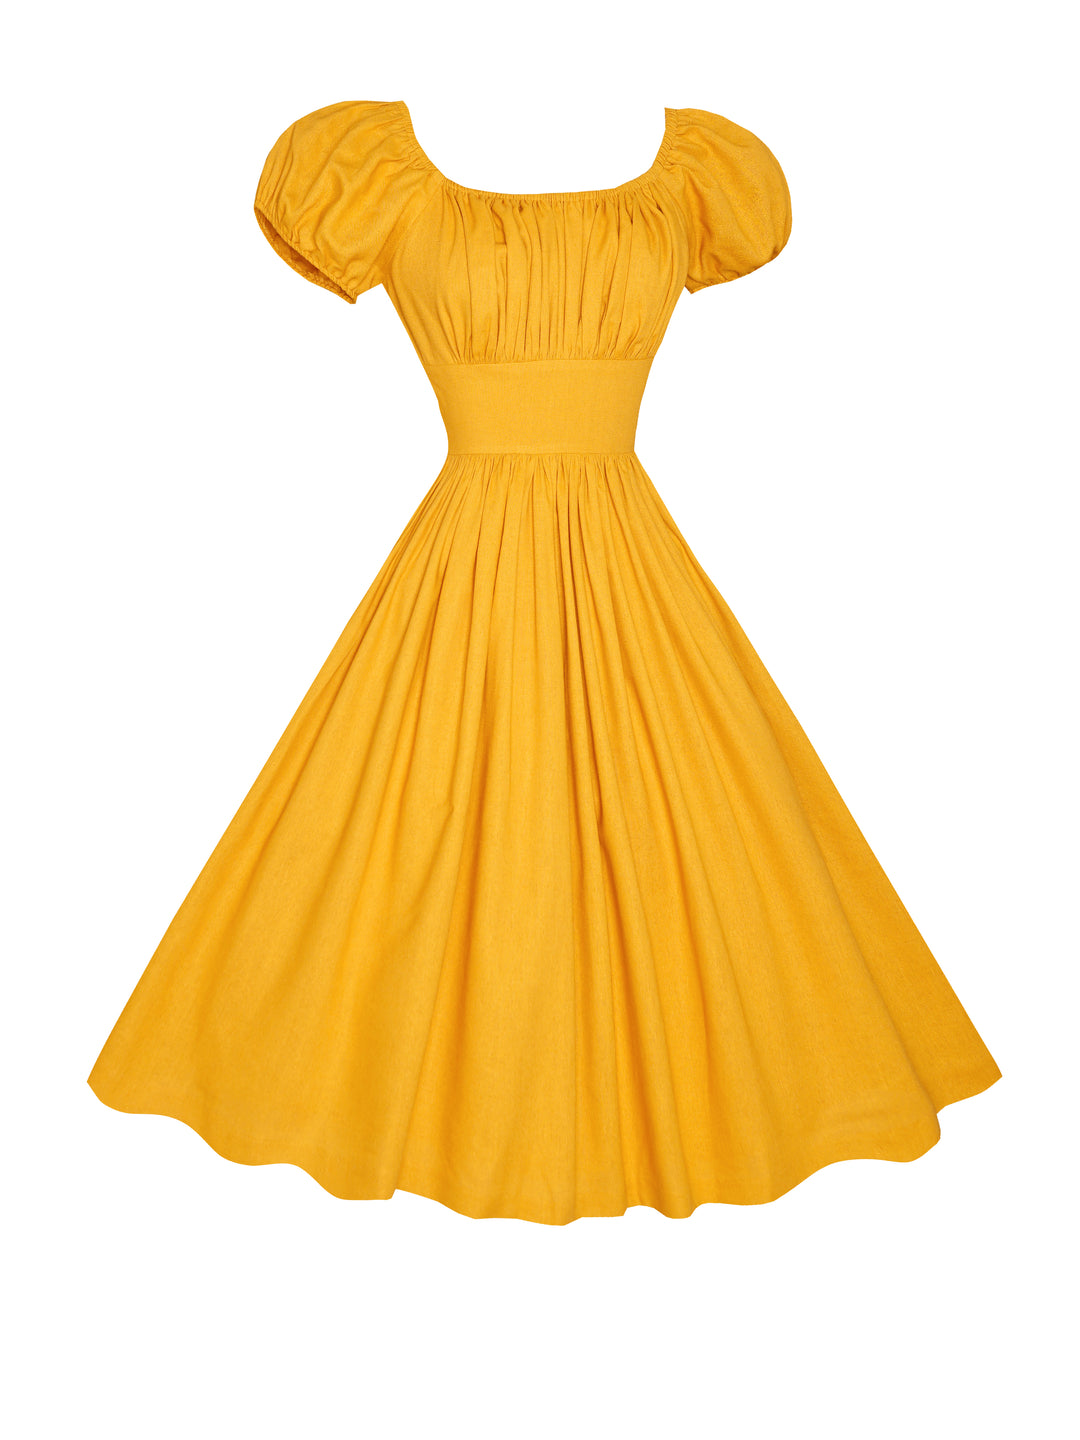 MTO - Loretta Dress in Tuscany Yellow Linen